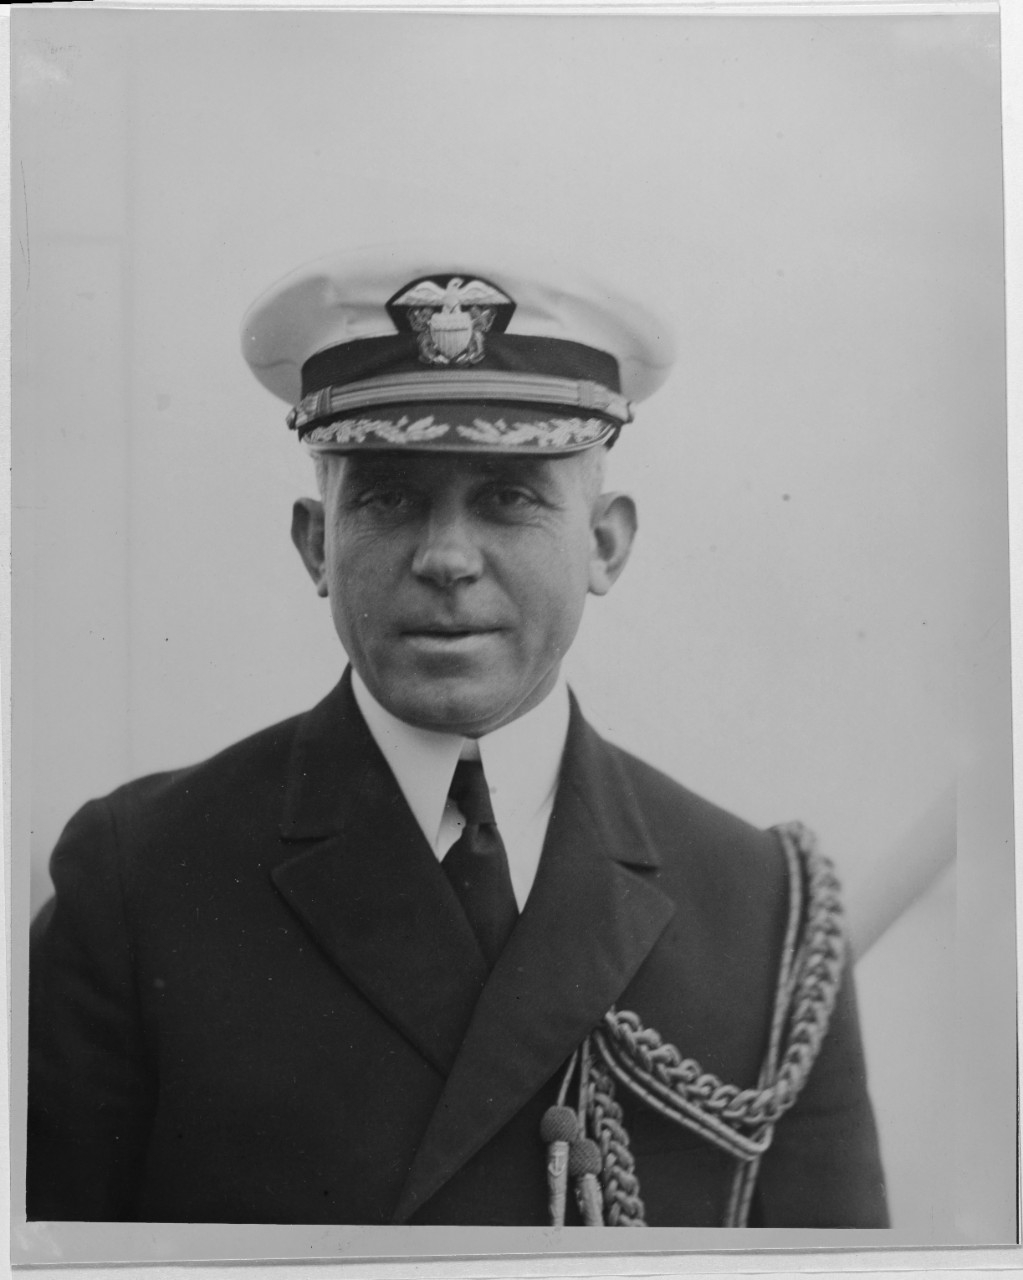 Commander Edward J. Foy, USN